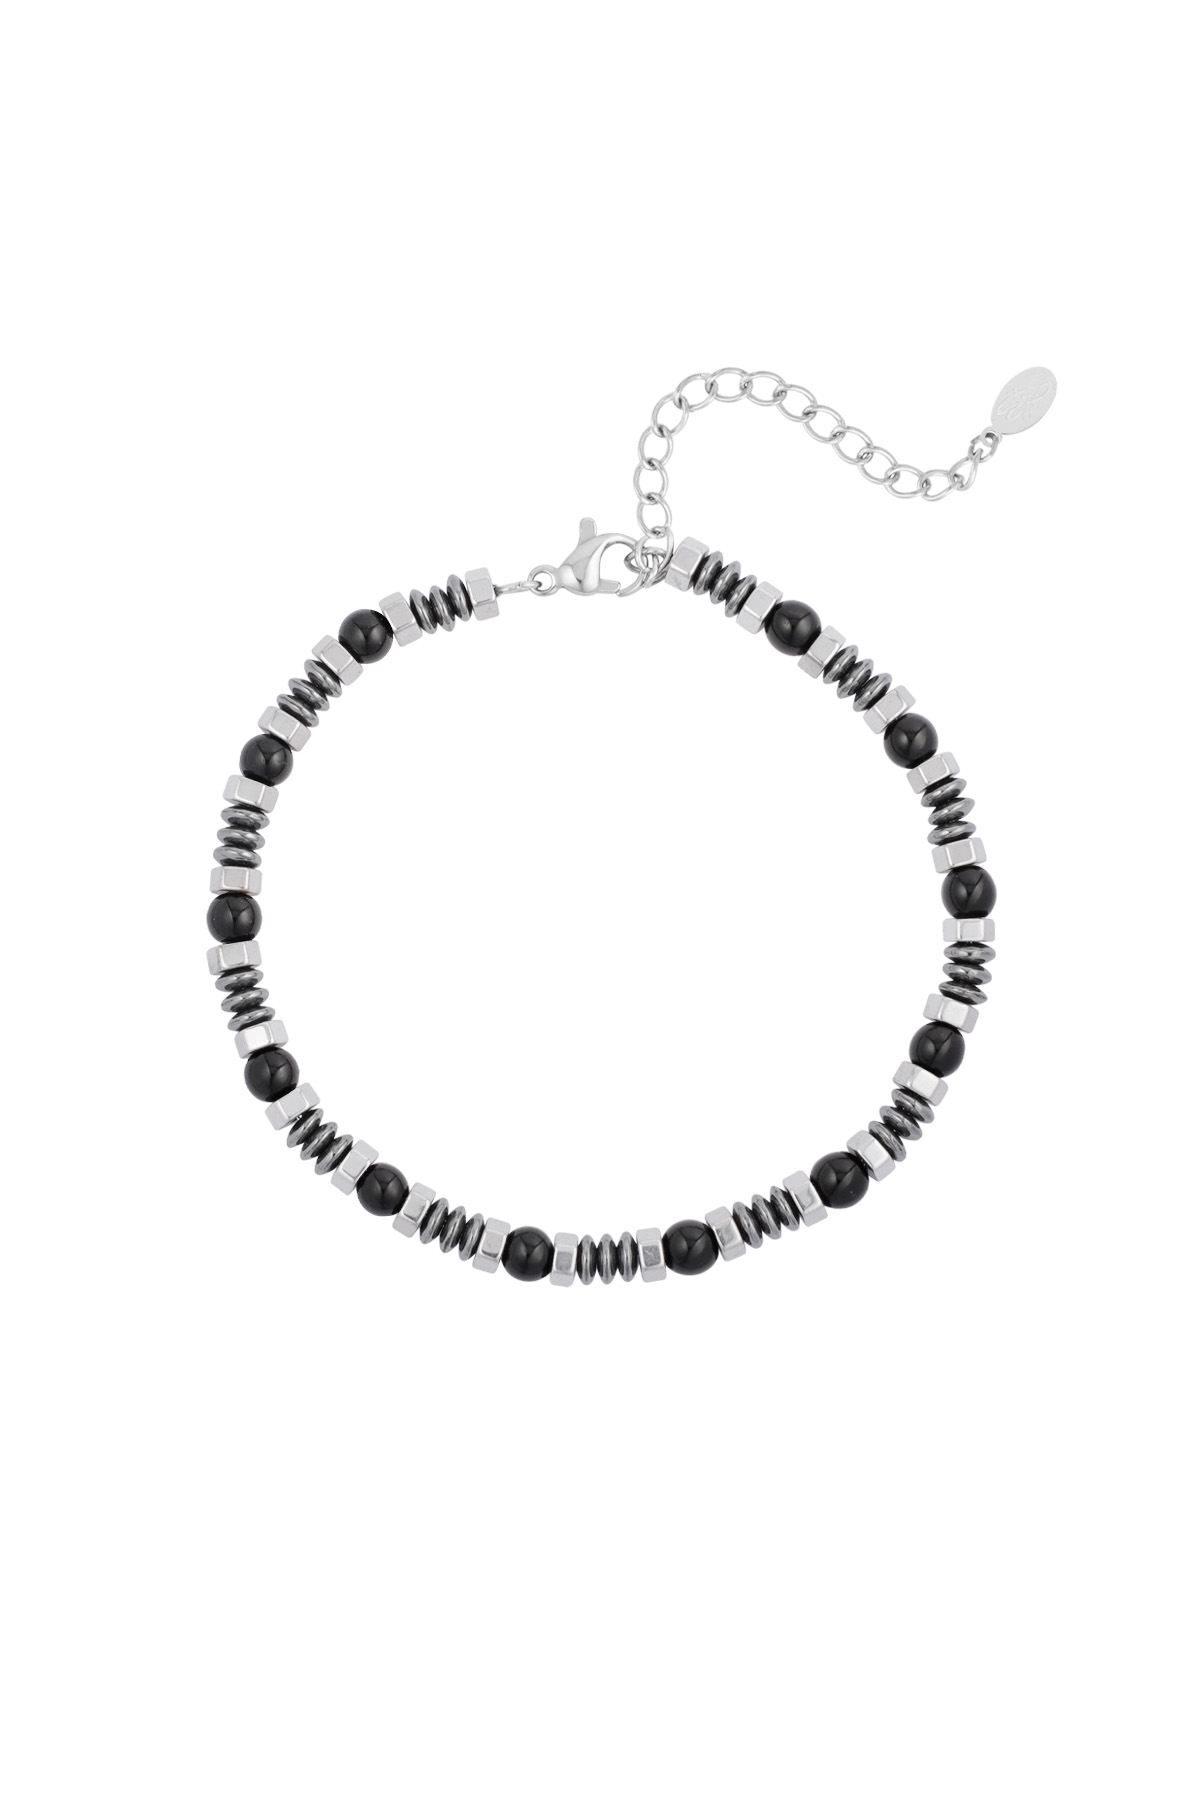 Simple men's bracelet with beads - black silver h5 